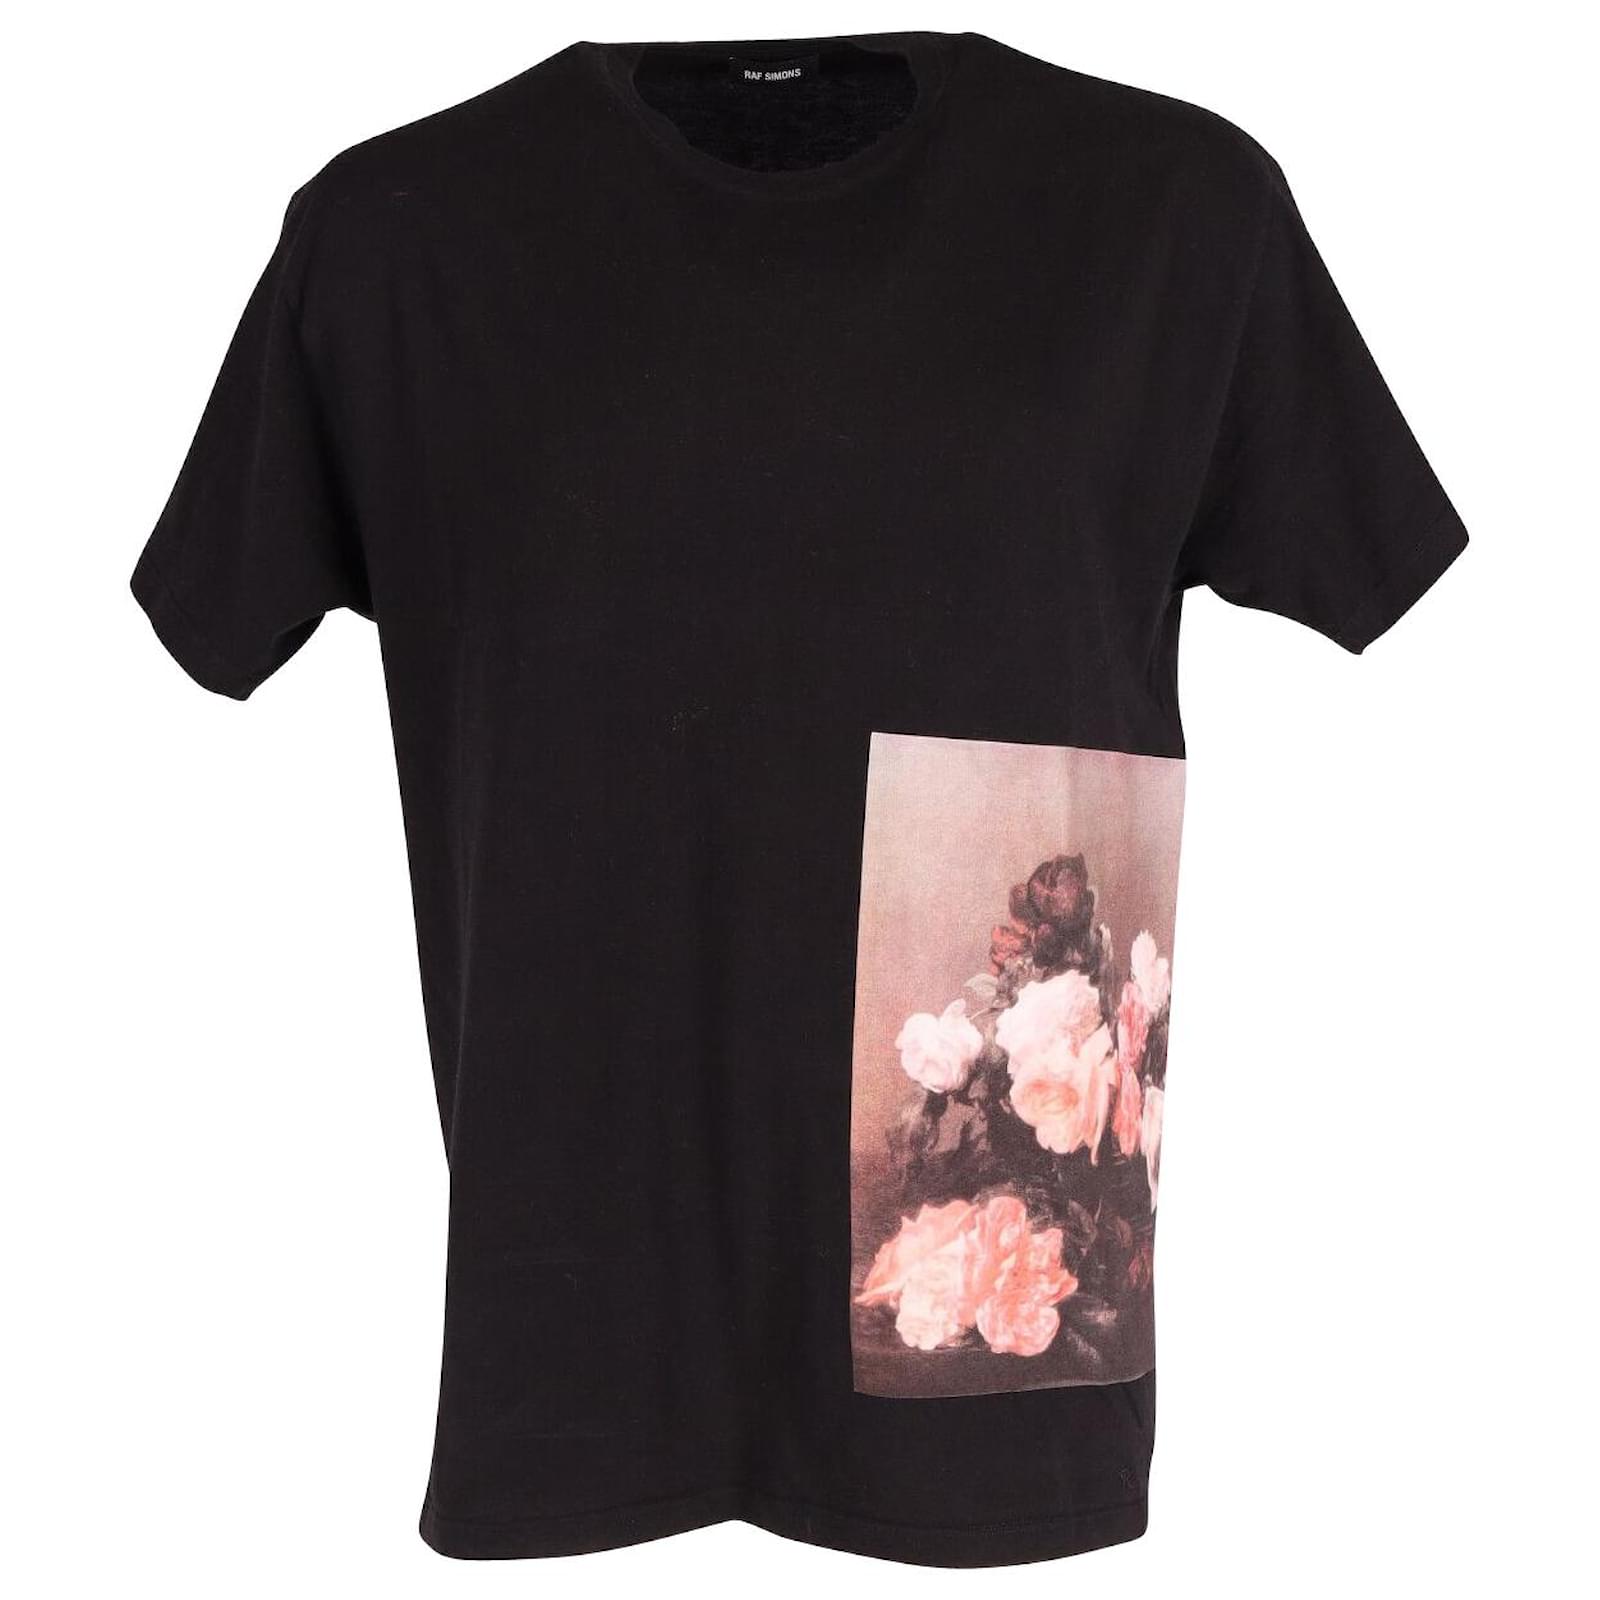 Raf Simons Joy Division Edition Flower Print T-Shirt in Black